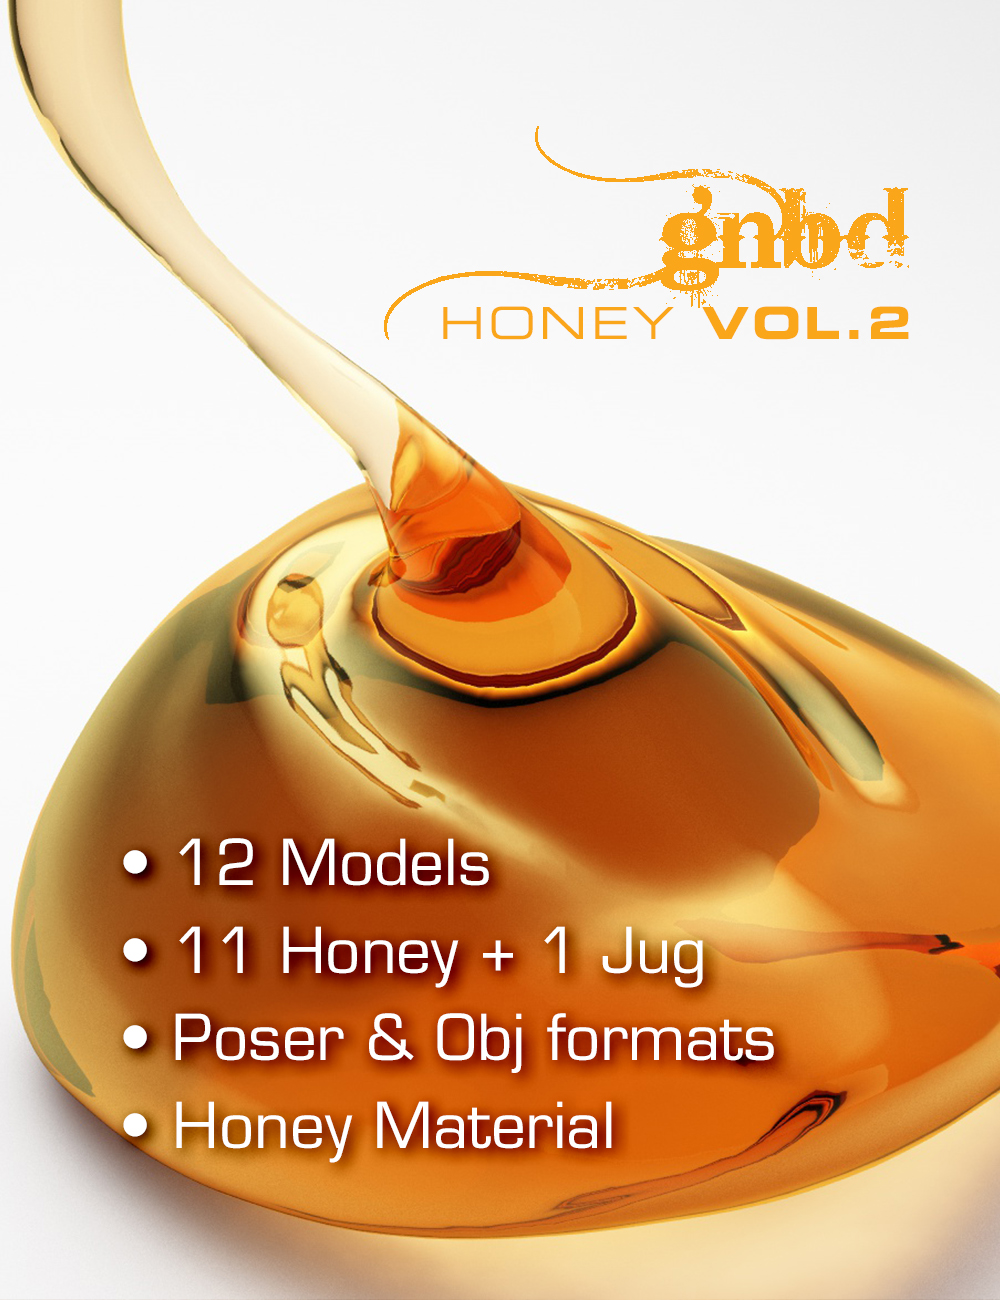 GNBD Honey Vol. 2 by: Giko, 3D Models by Daz 3D